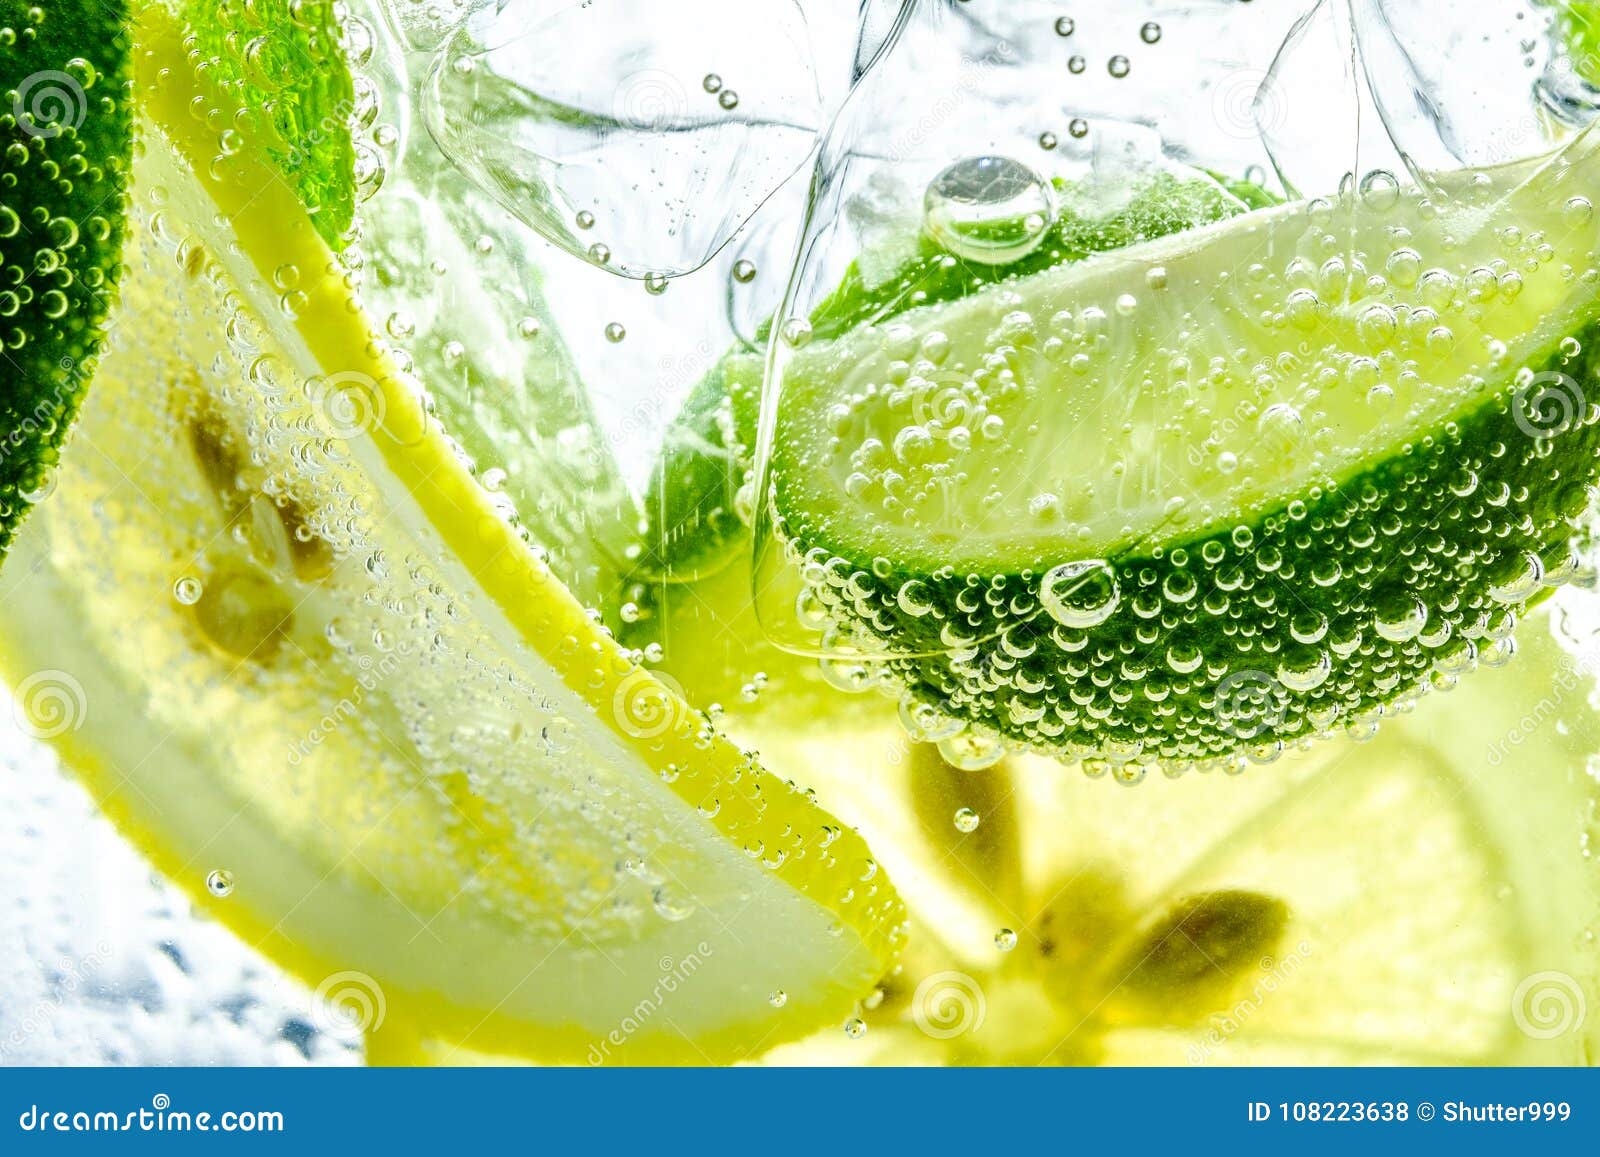 lemon drop in fizzy sparkling water, juice